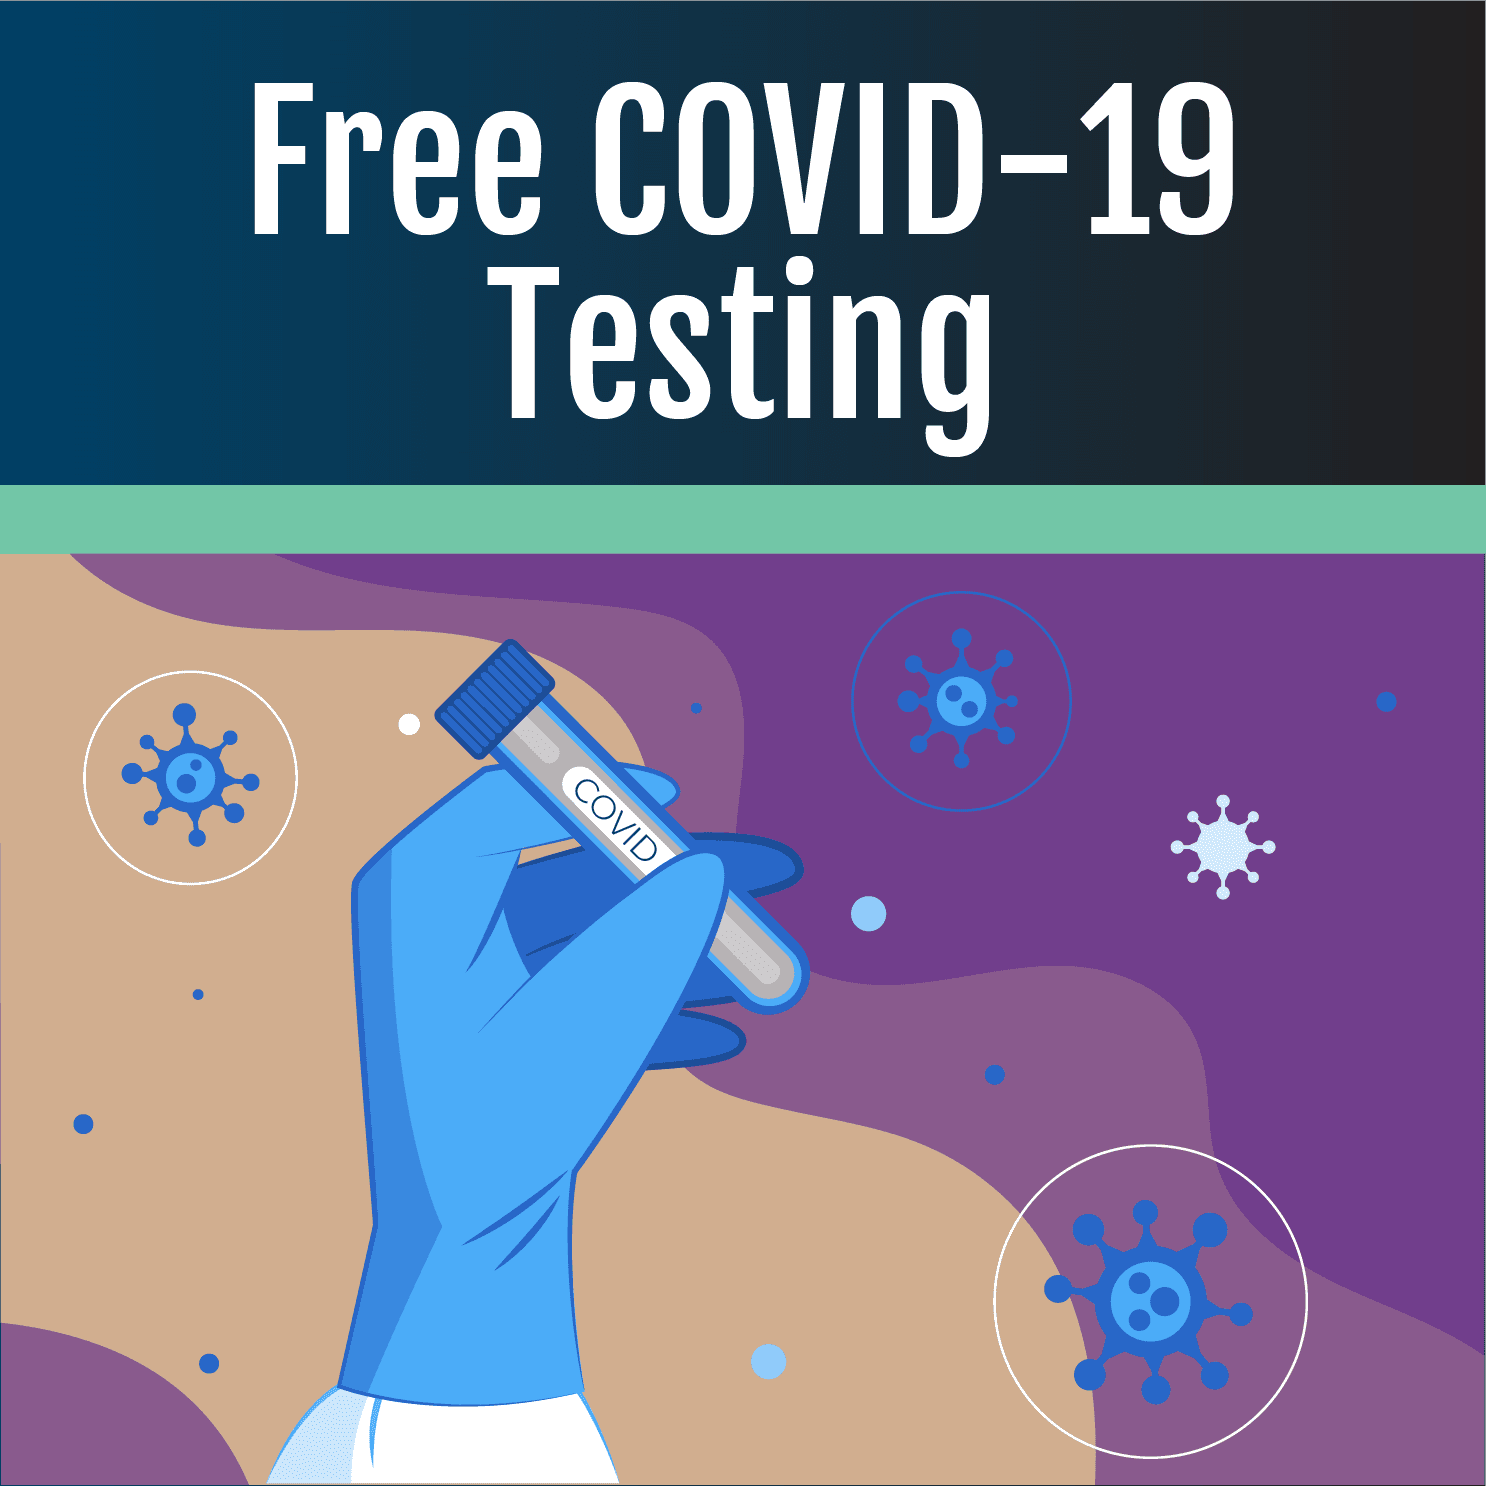 Free Covid tests